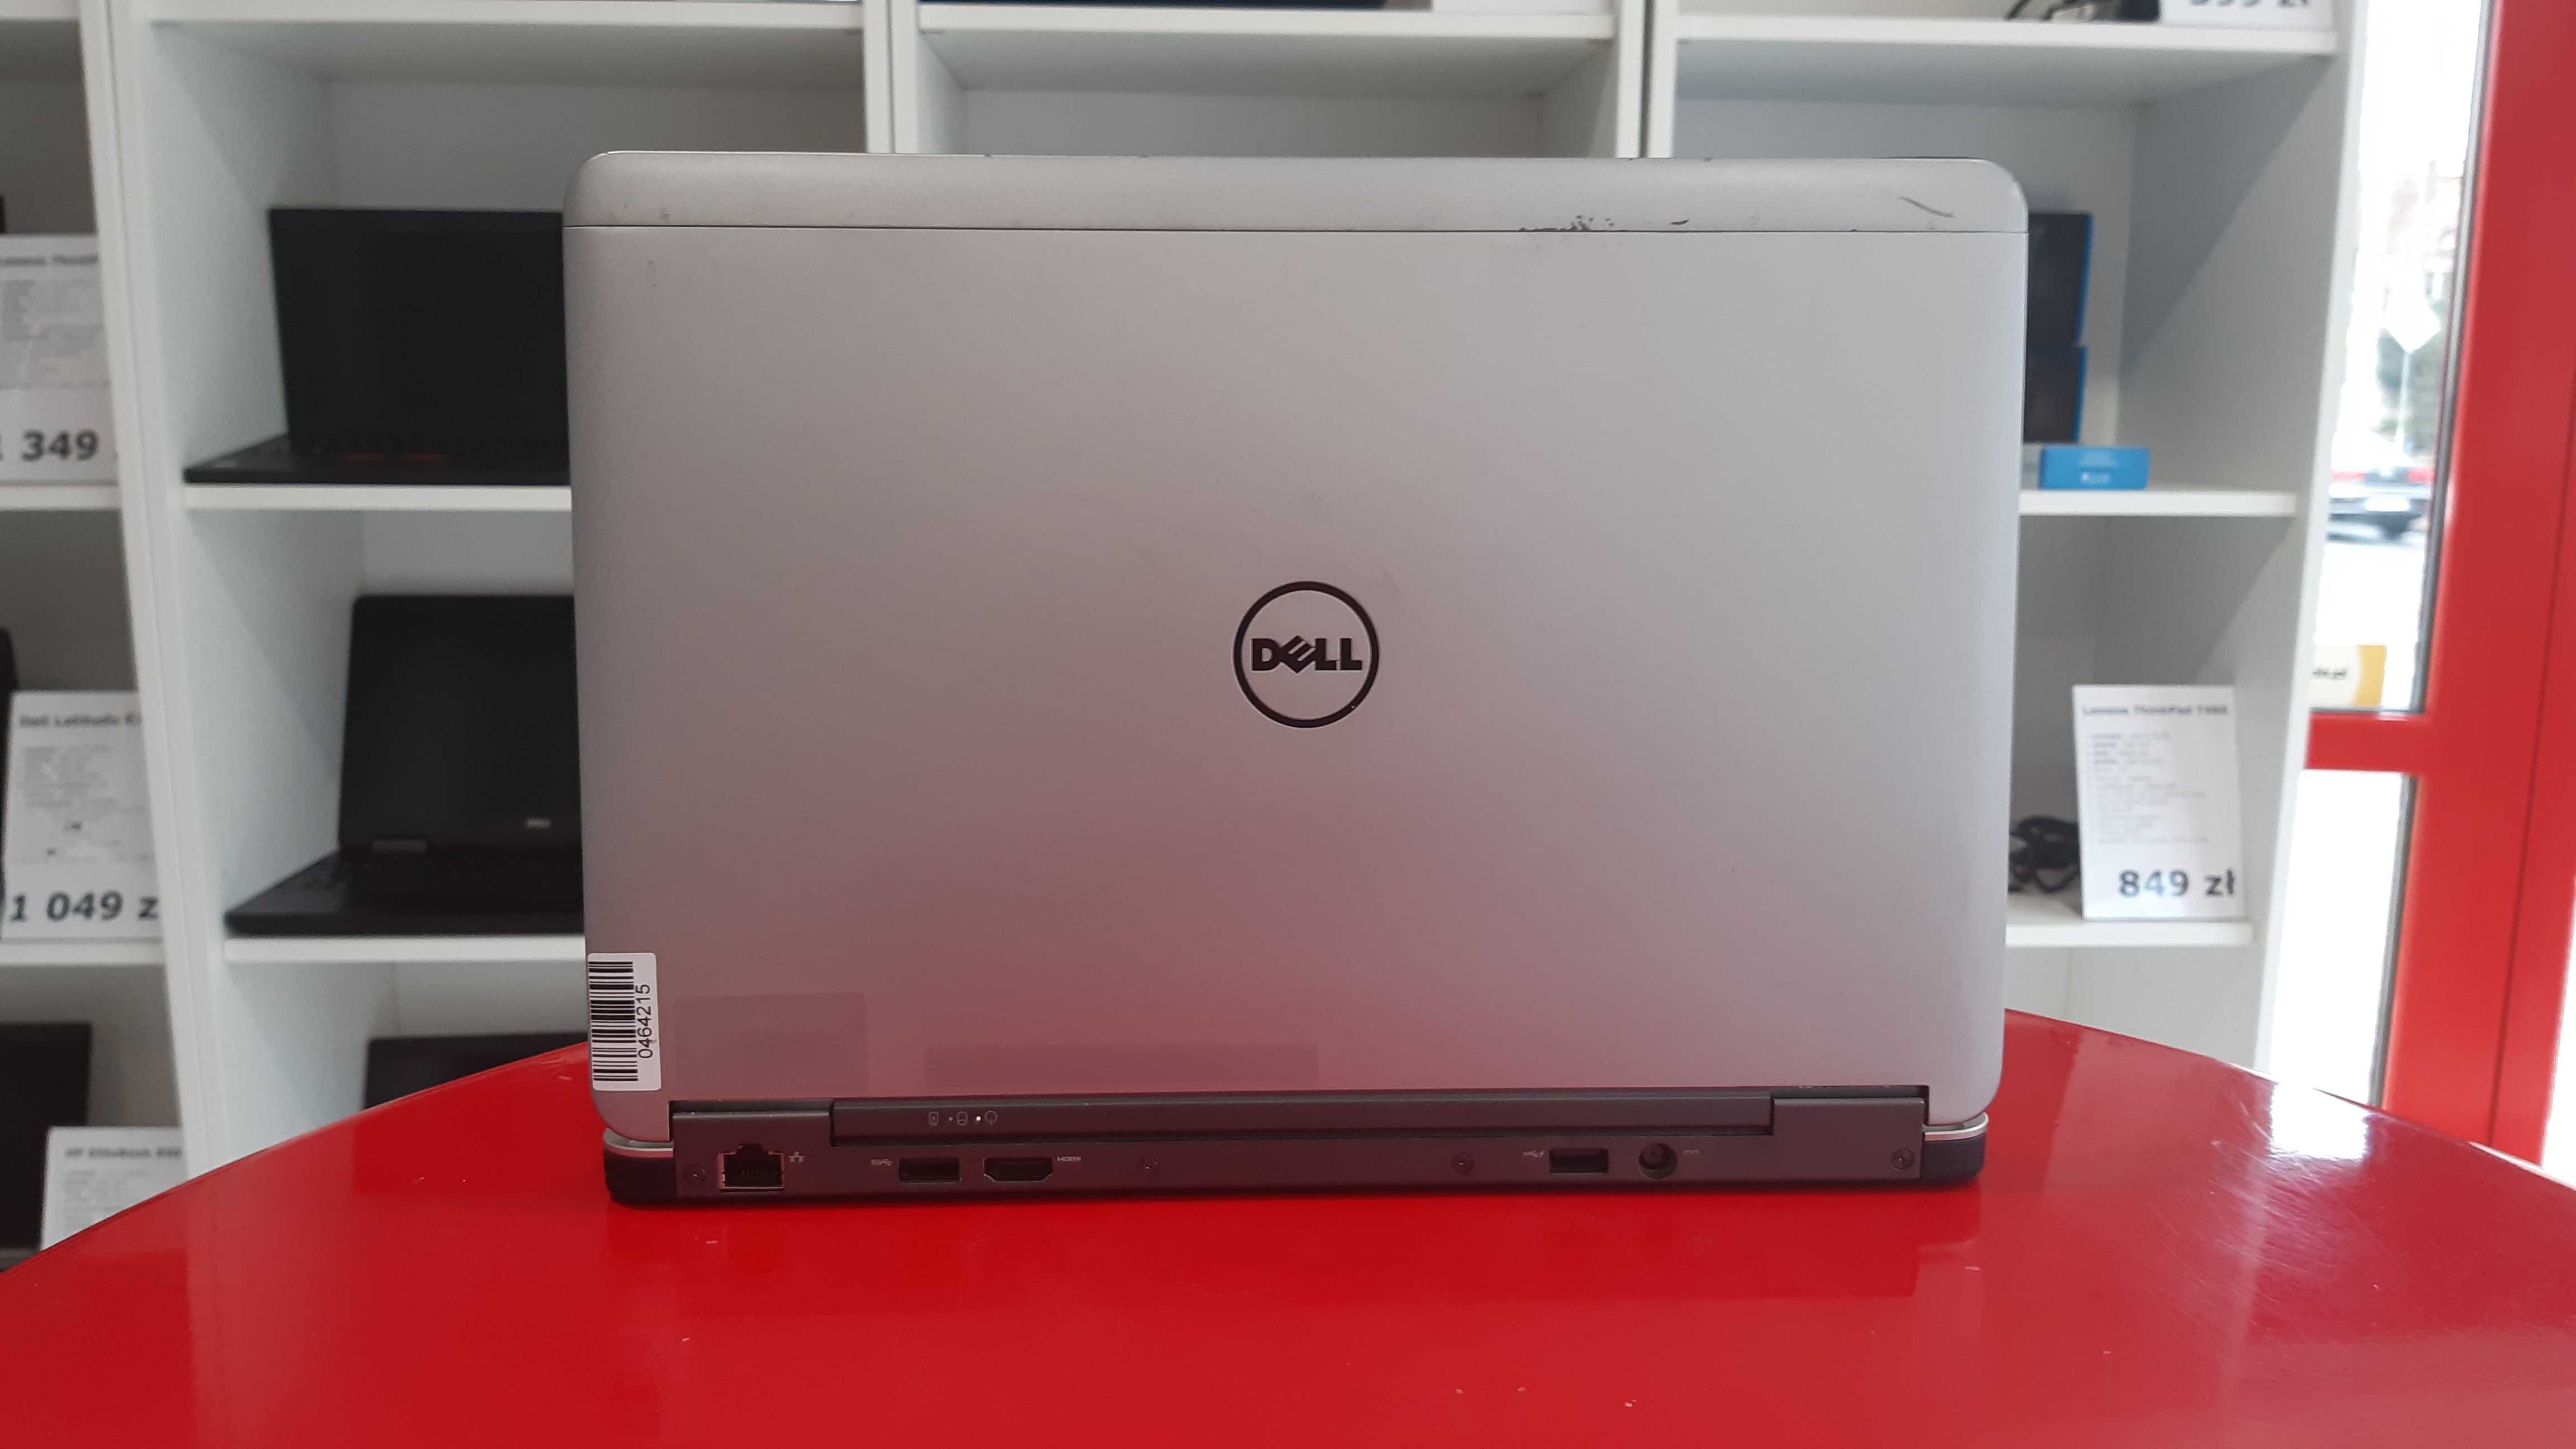 Tani Laptop Dell Latitude E7240 i5-4300u 8GB/128SSD Win10 FV23 Raty0%